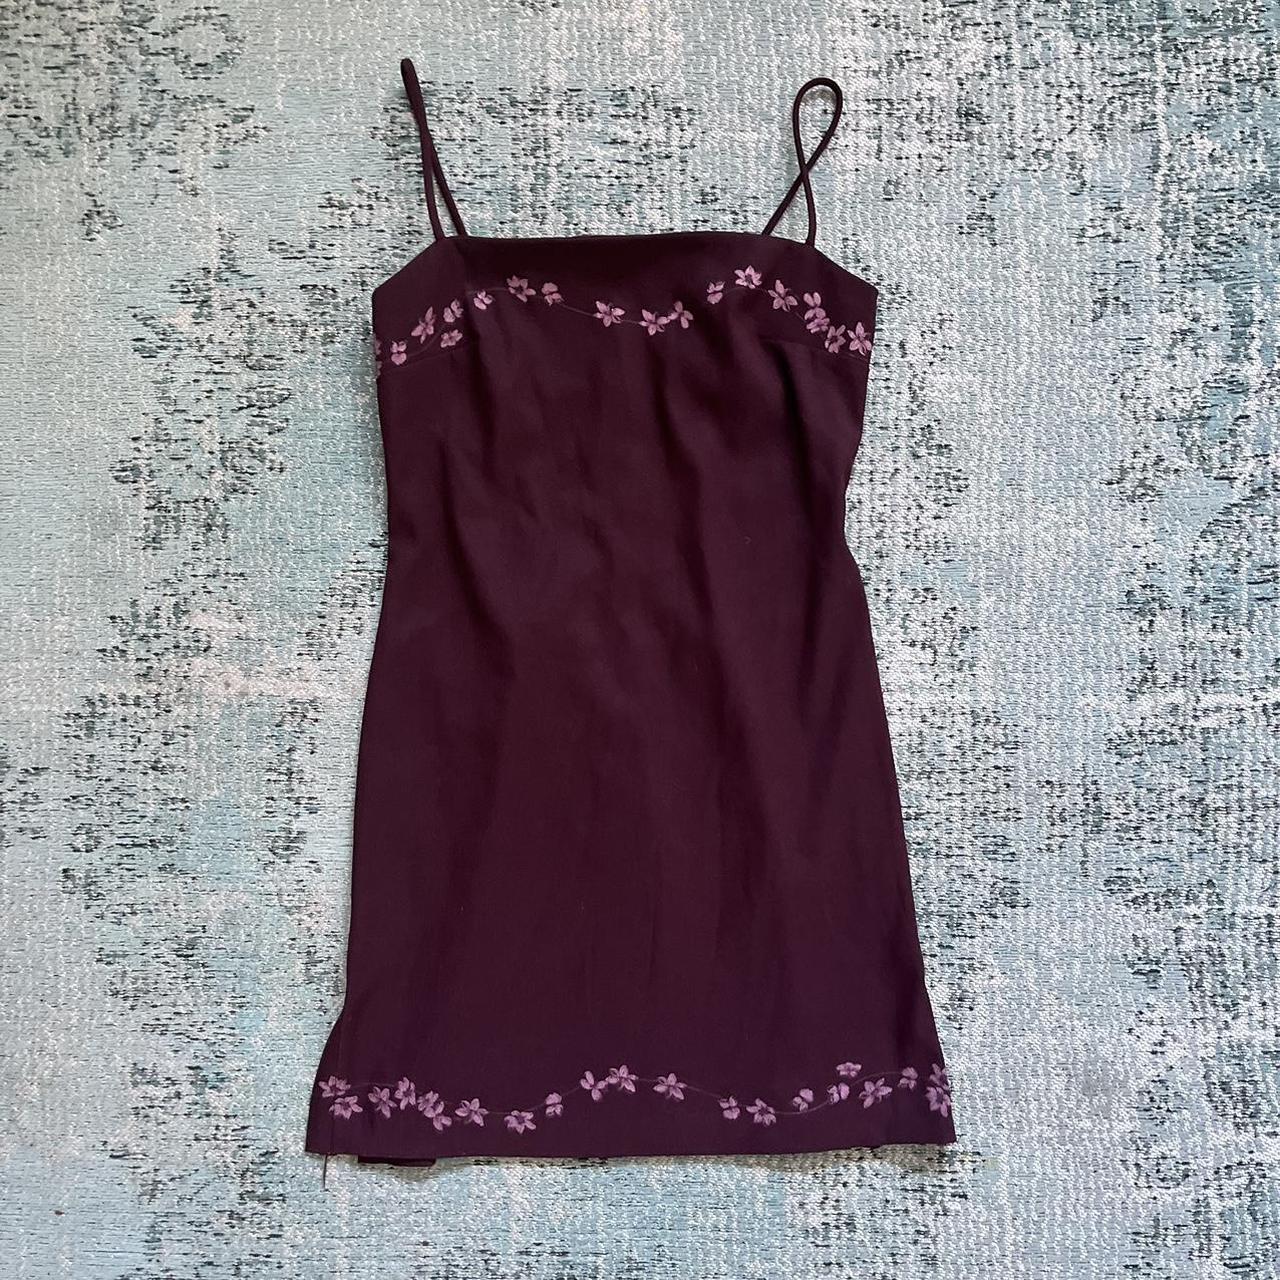 Vintage plum mini dress. Flowers around the neck and... - Depop